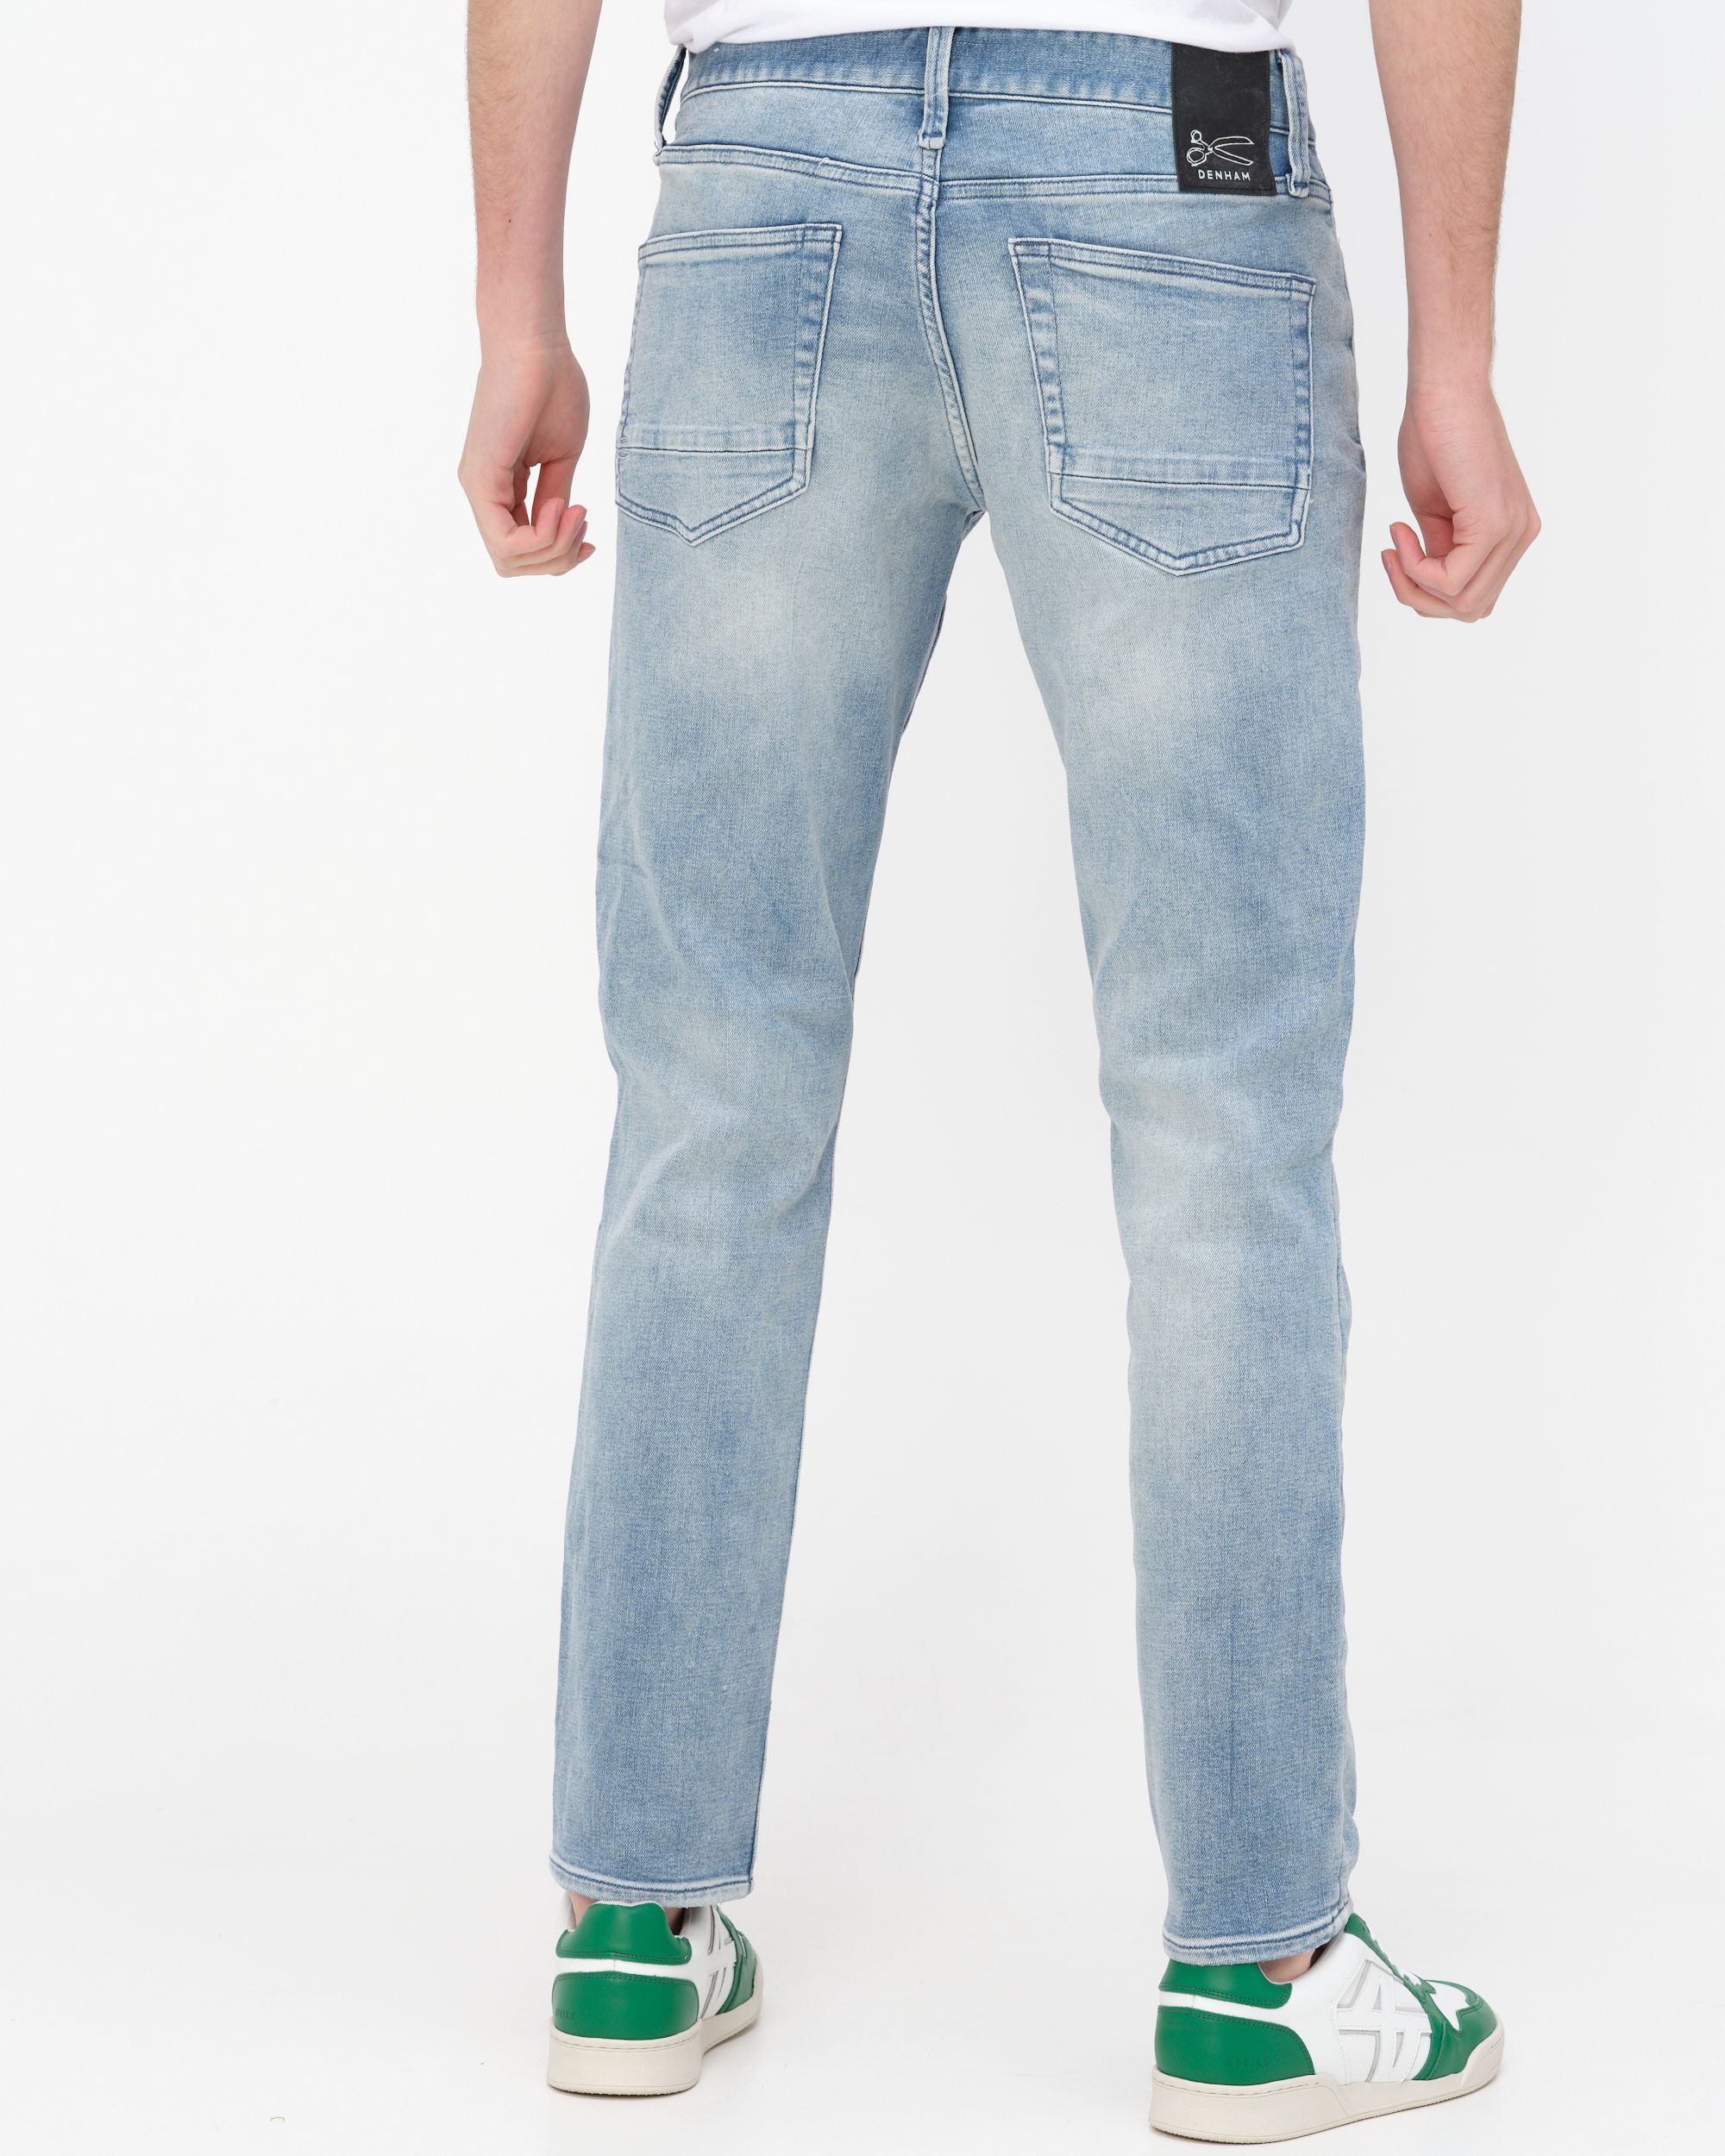 DENHAM Razor LIW Jeans Blauw 081247-001-29/32